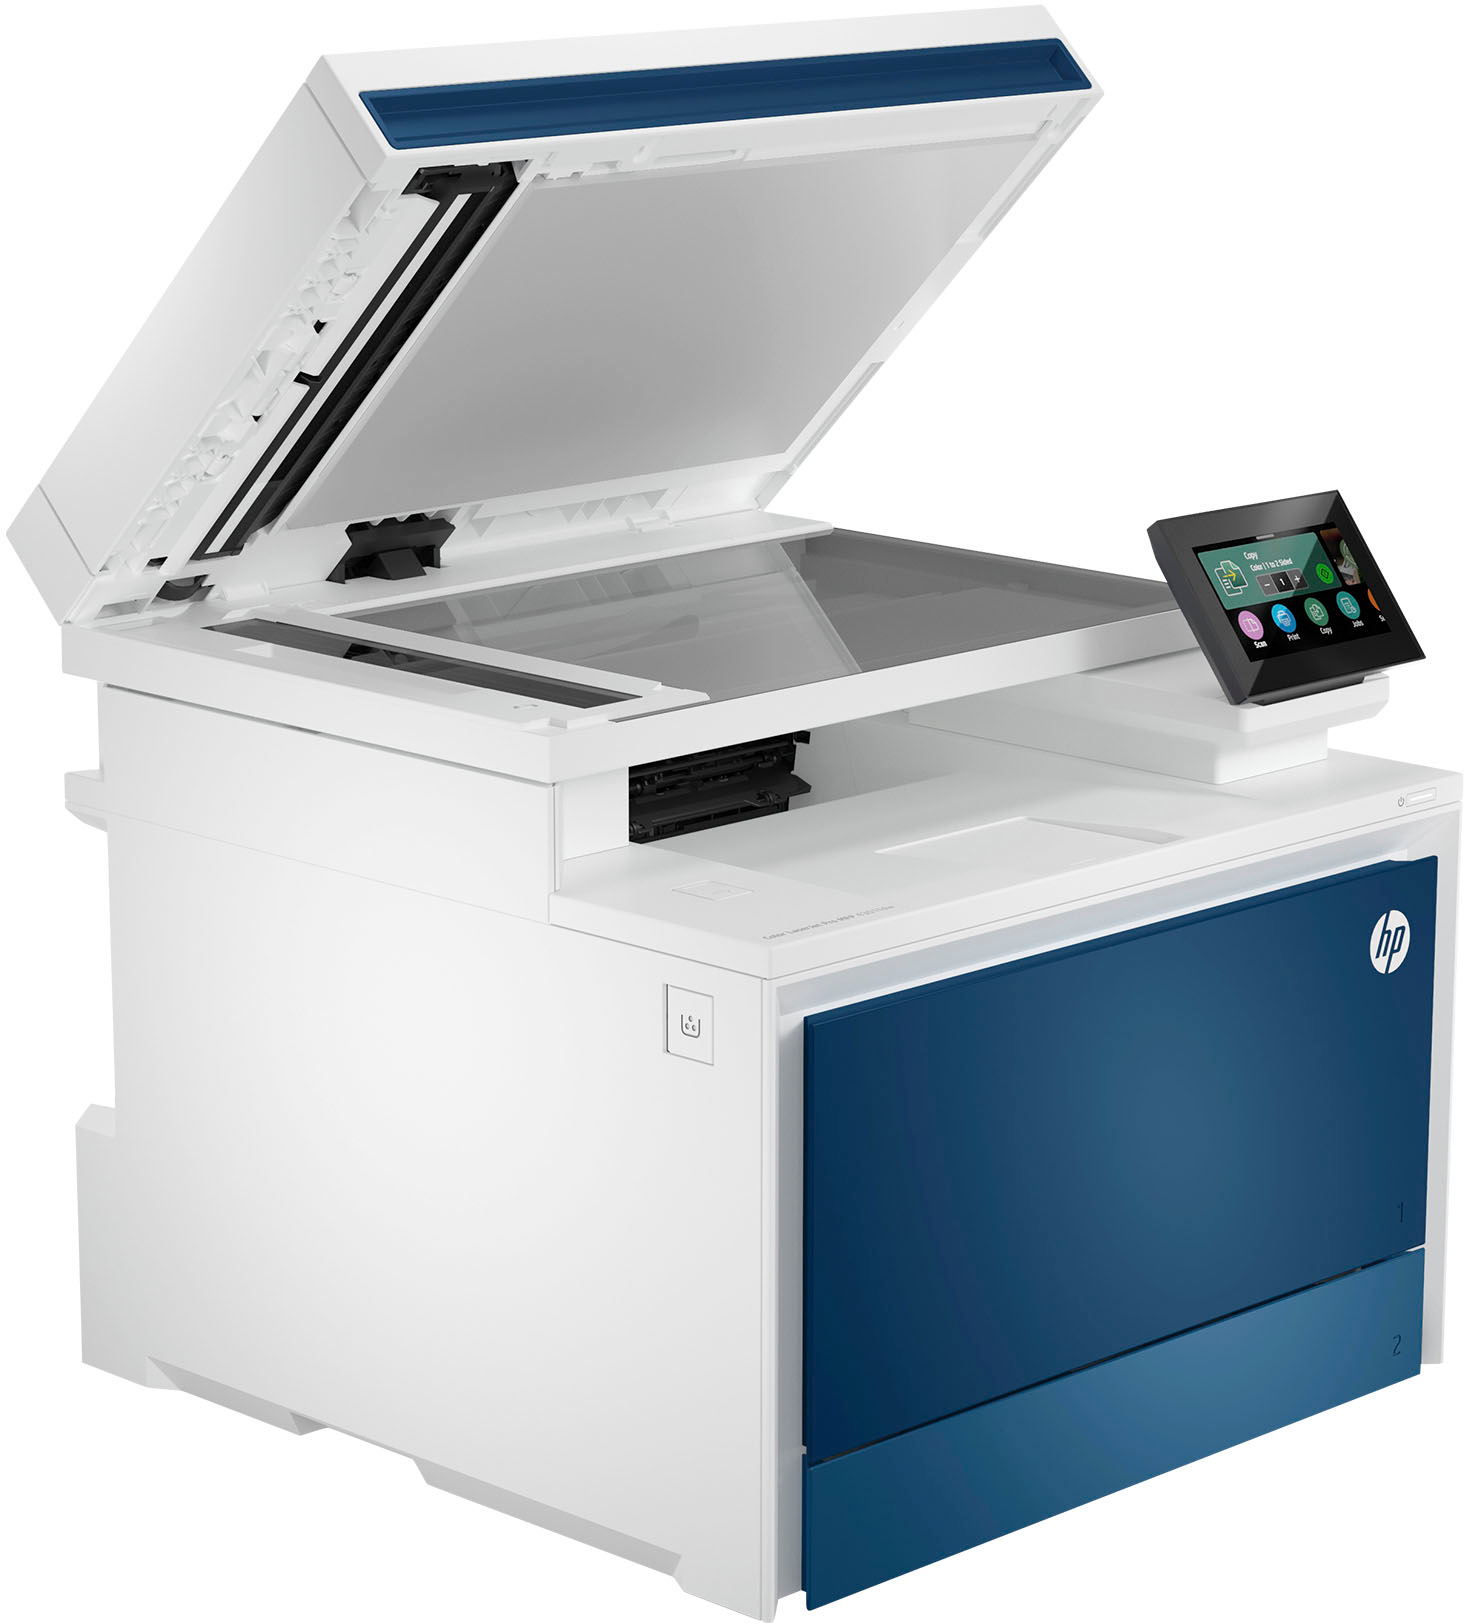 Hp Color Laser 150nw Printer - Guaranteed Digital Computers